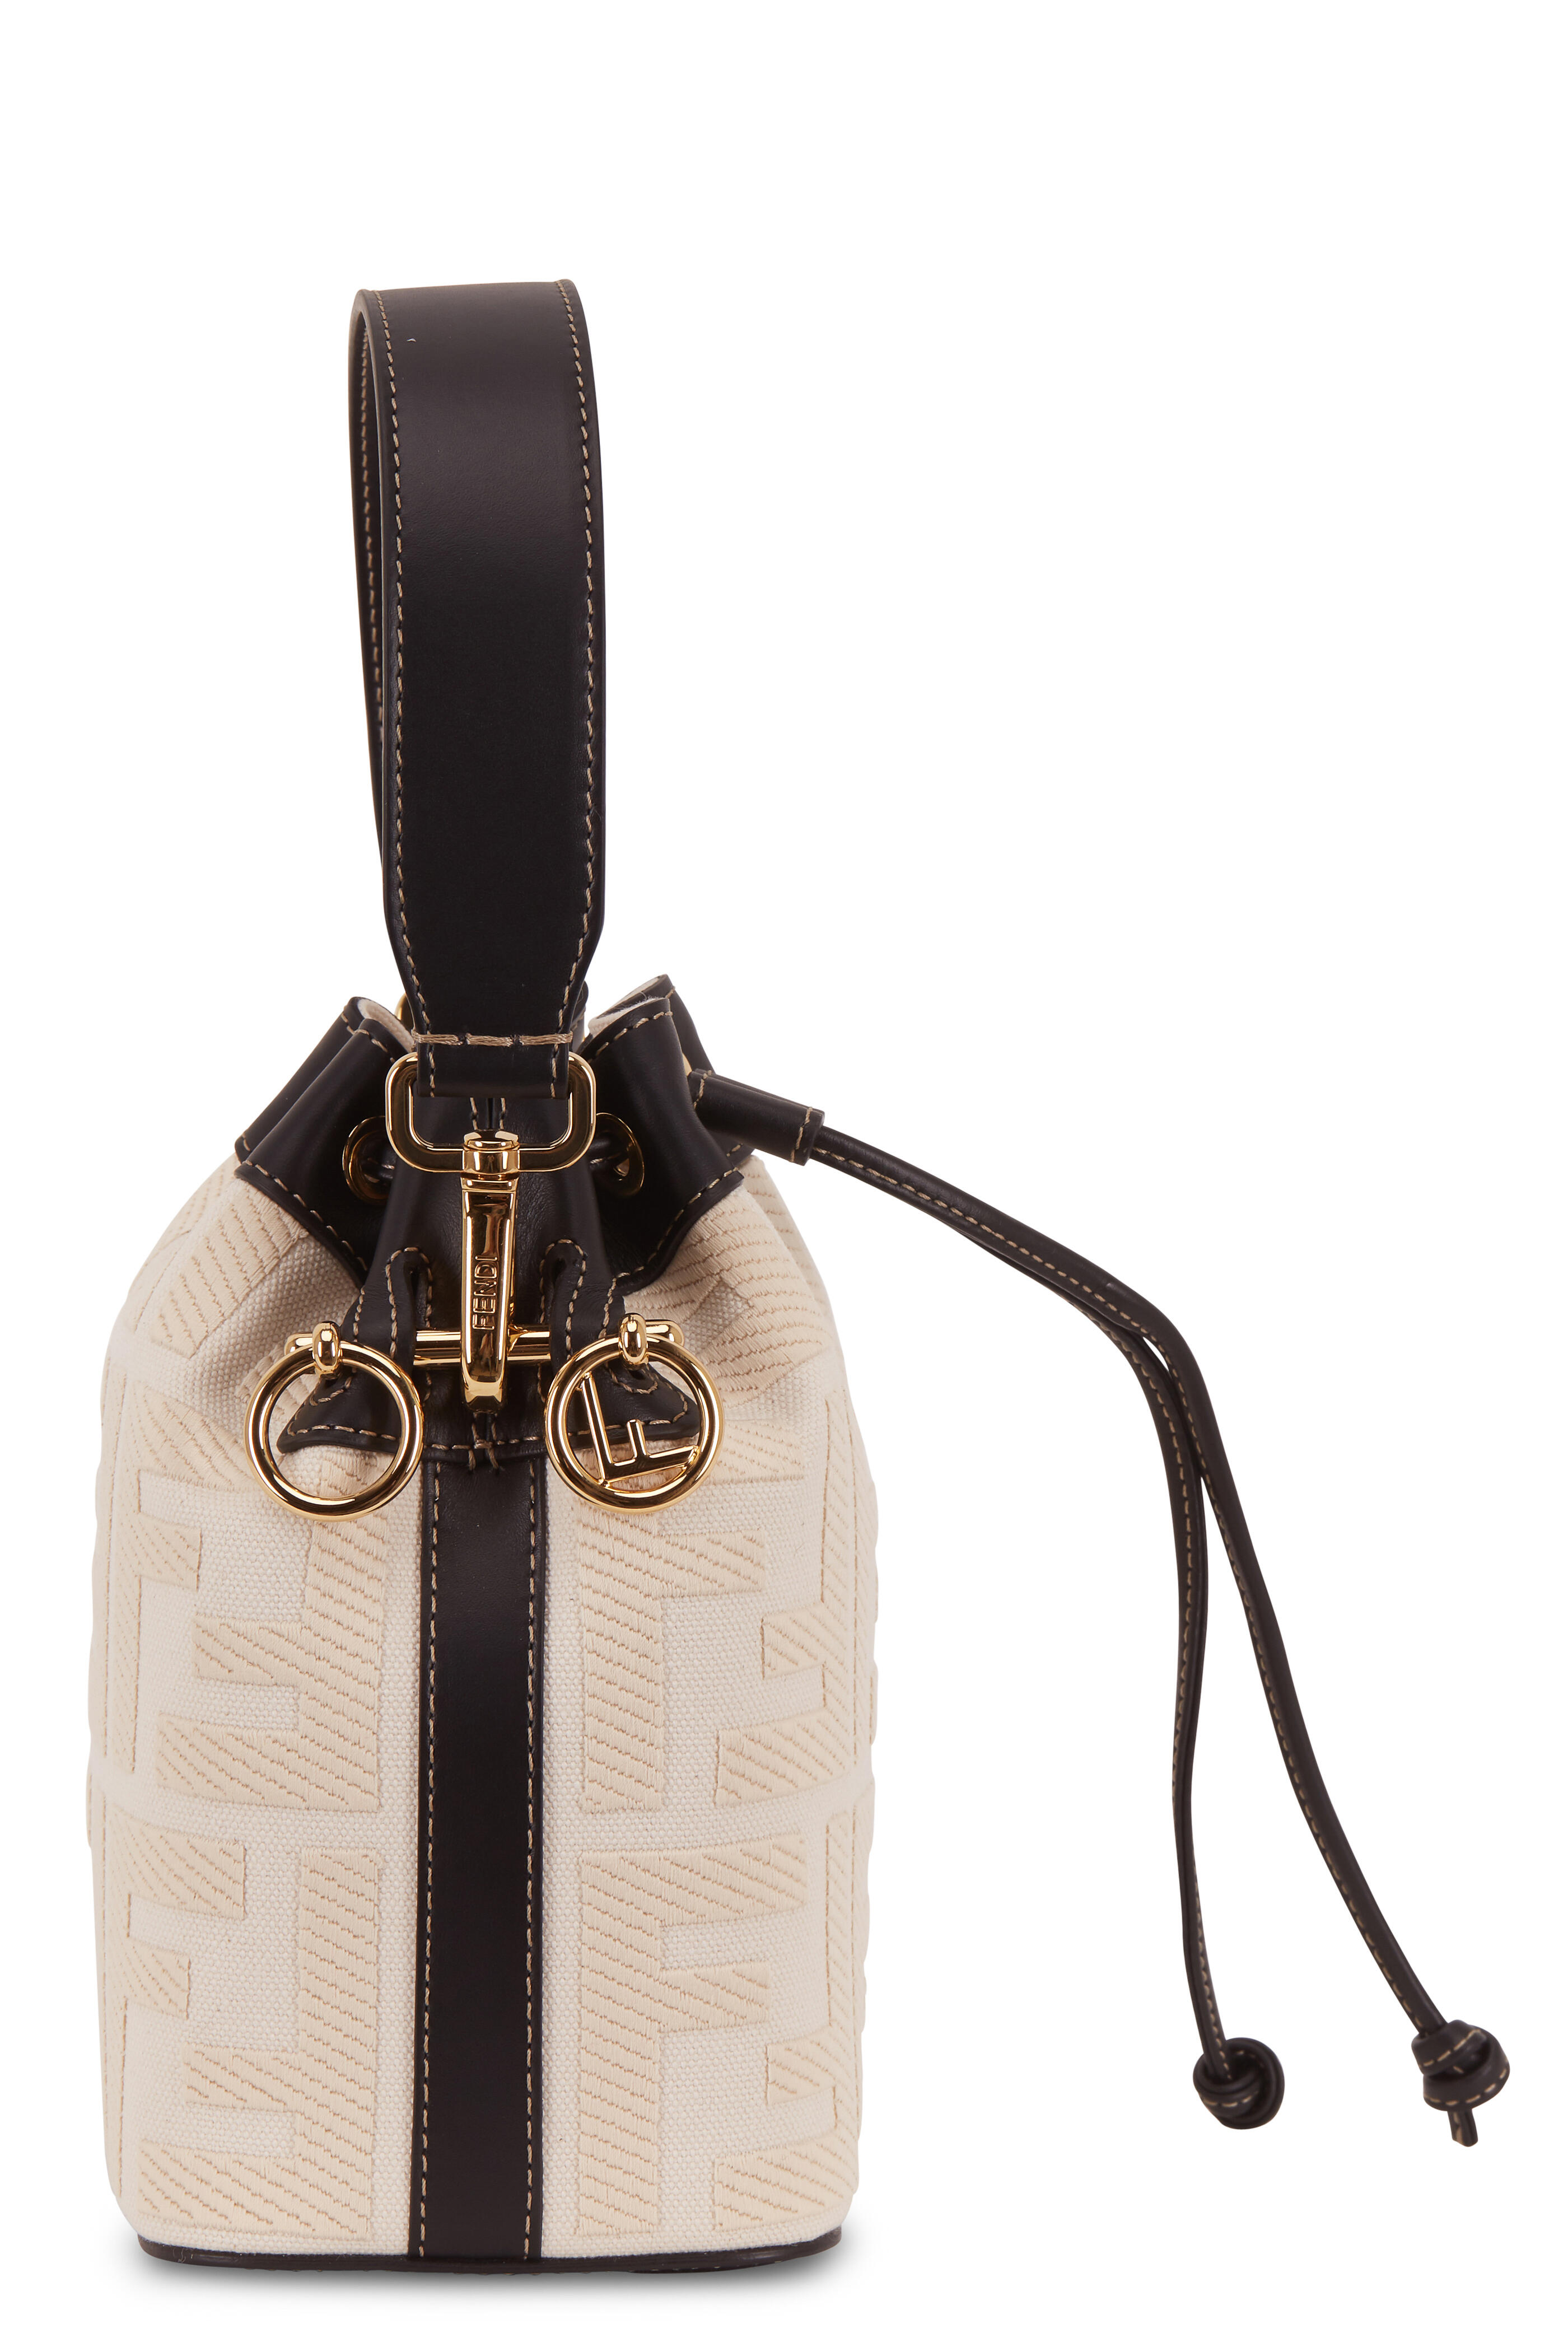 Fendi Mon Tresor Leather Bag With Embossed Ff Monogram in White